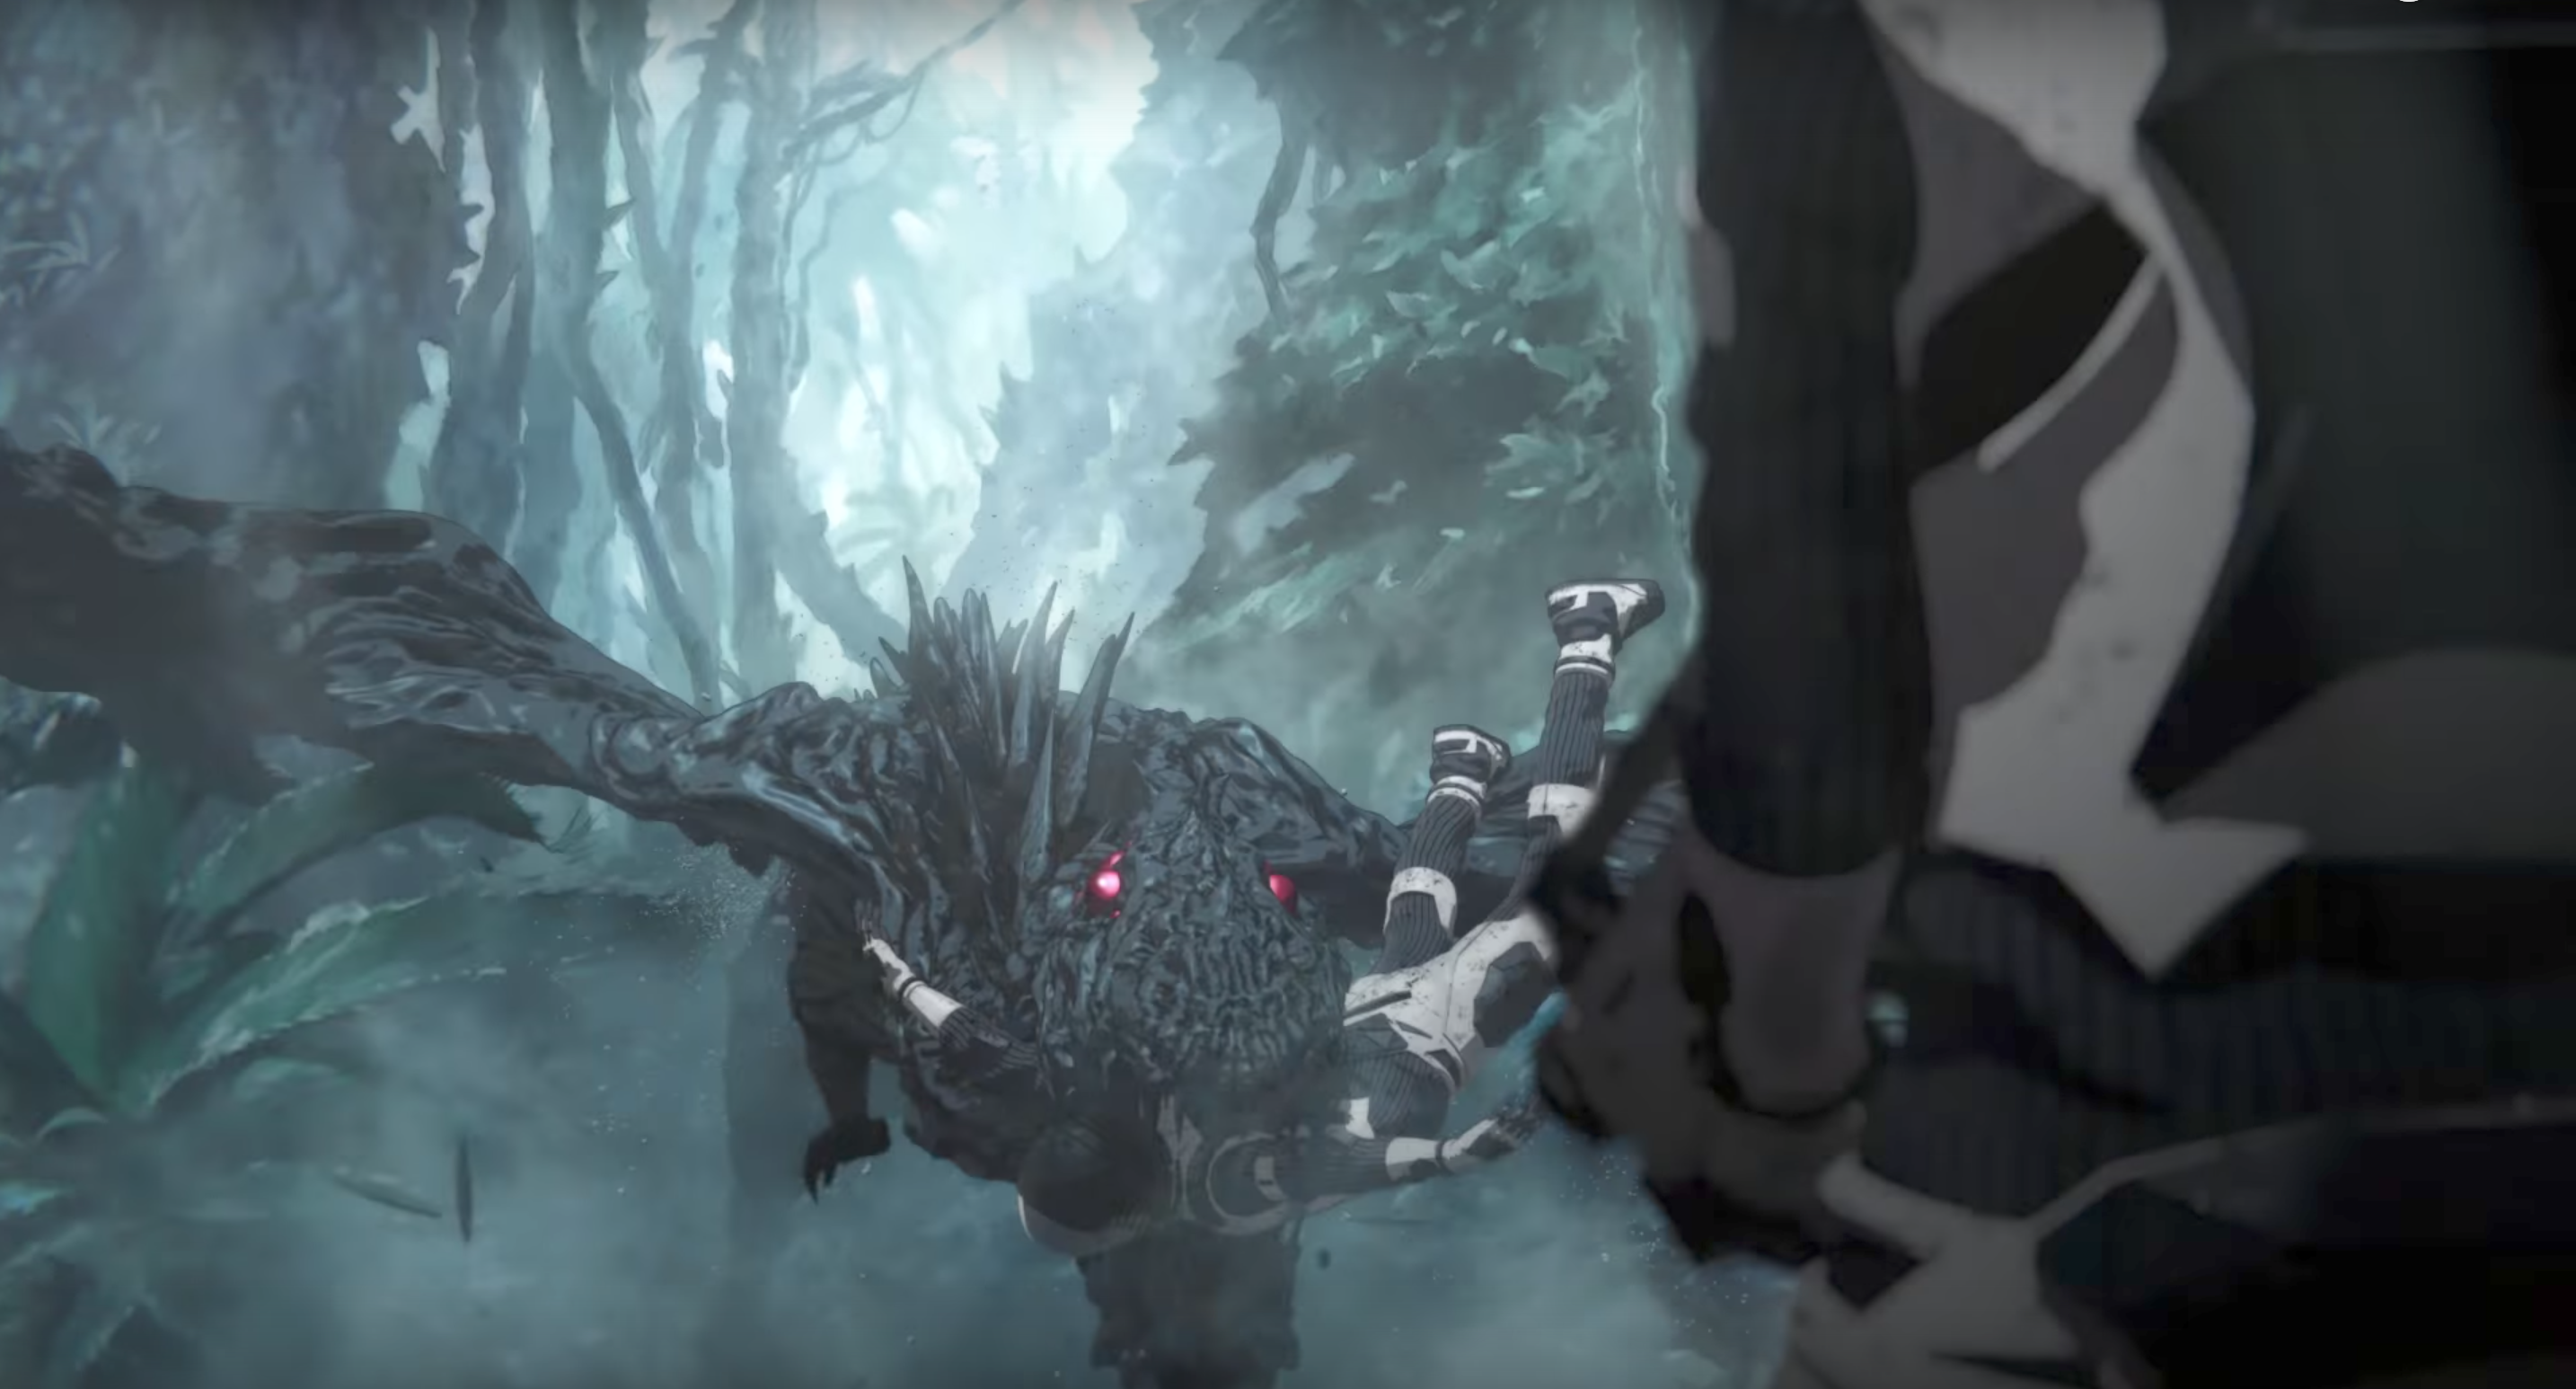 Godzilla: Monster Planet Anime Movie Details Revealed